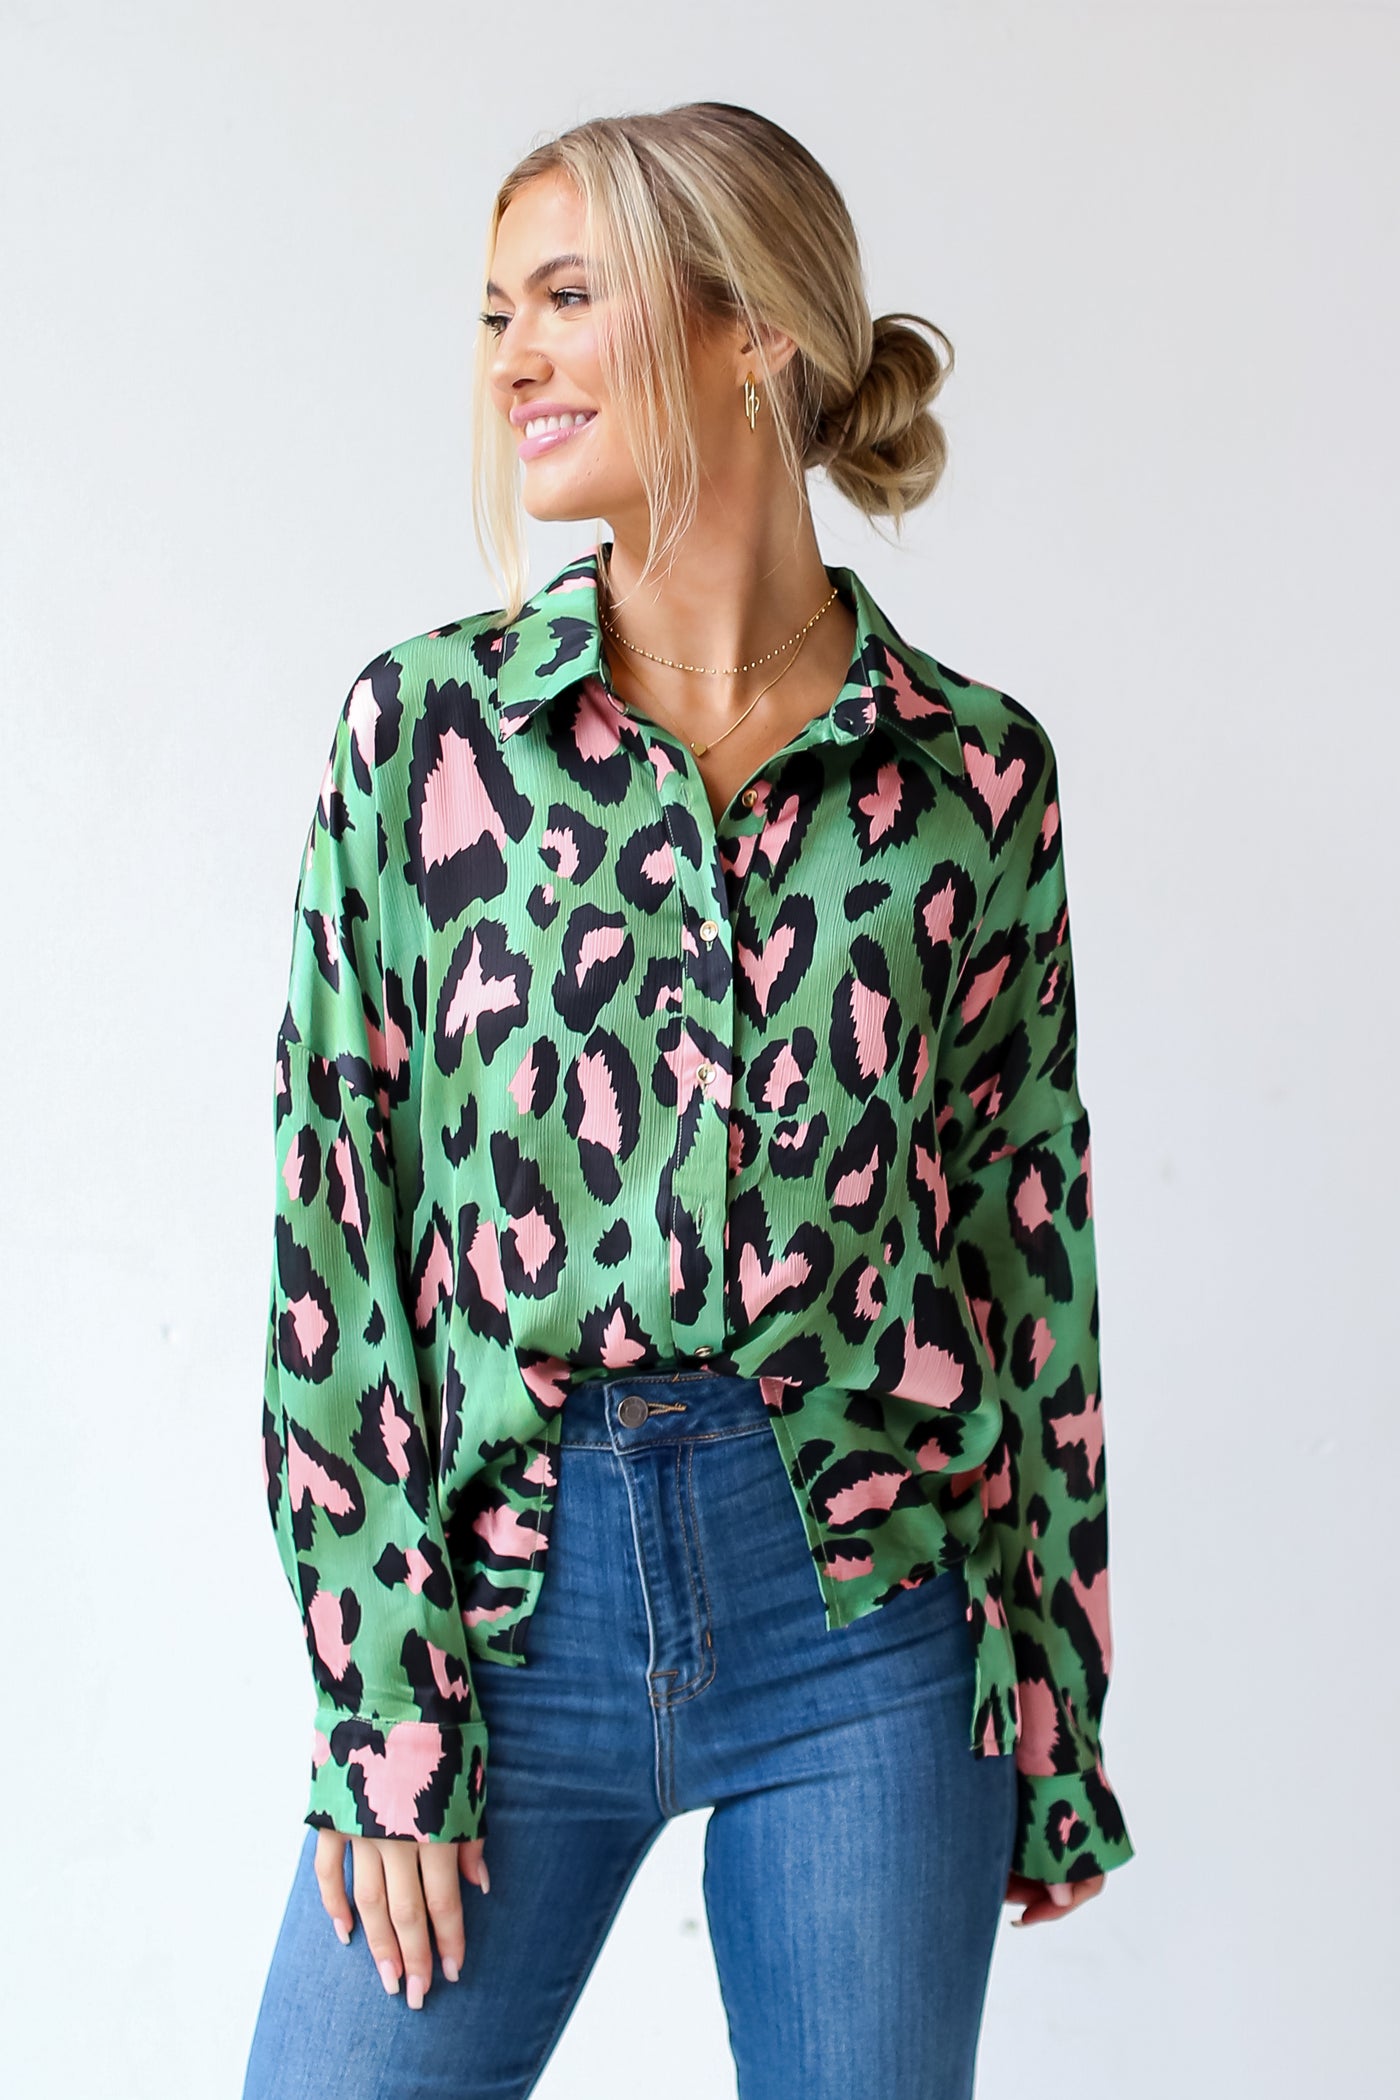 cute animal print blouse